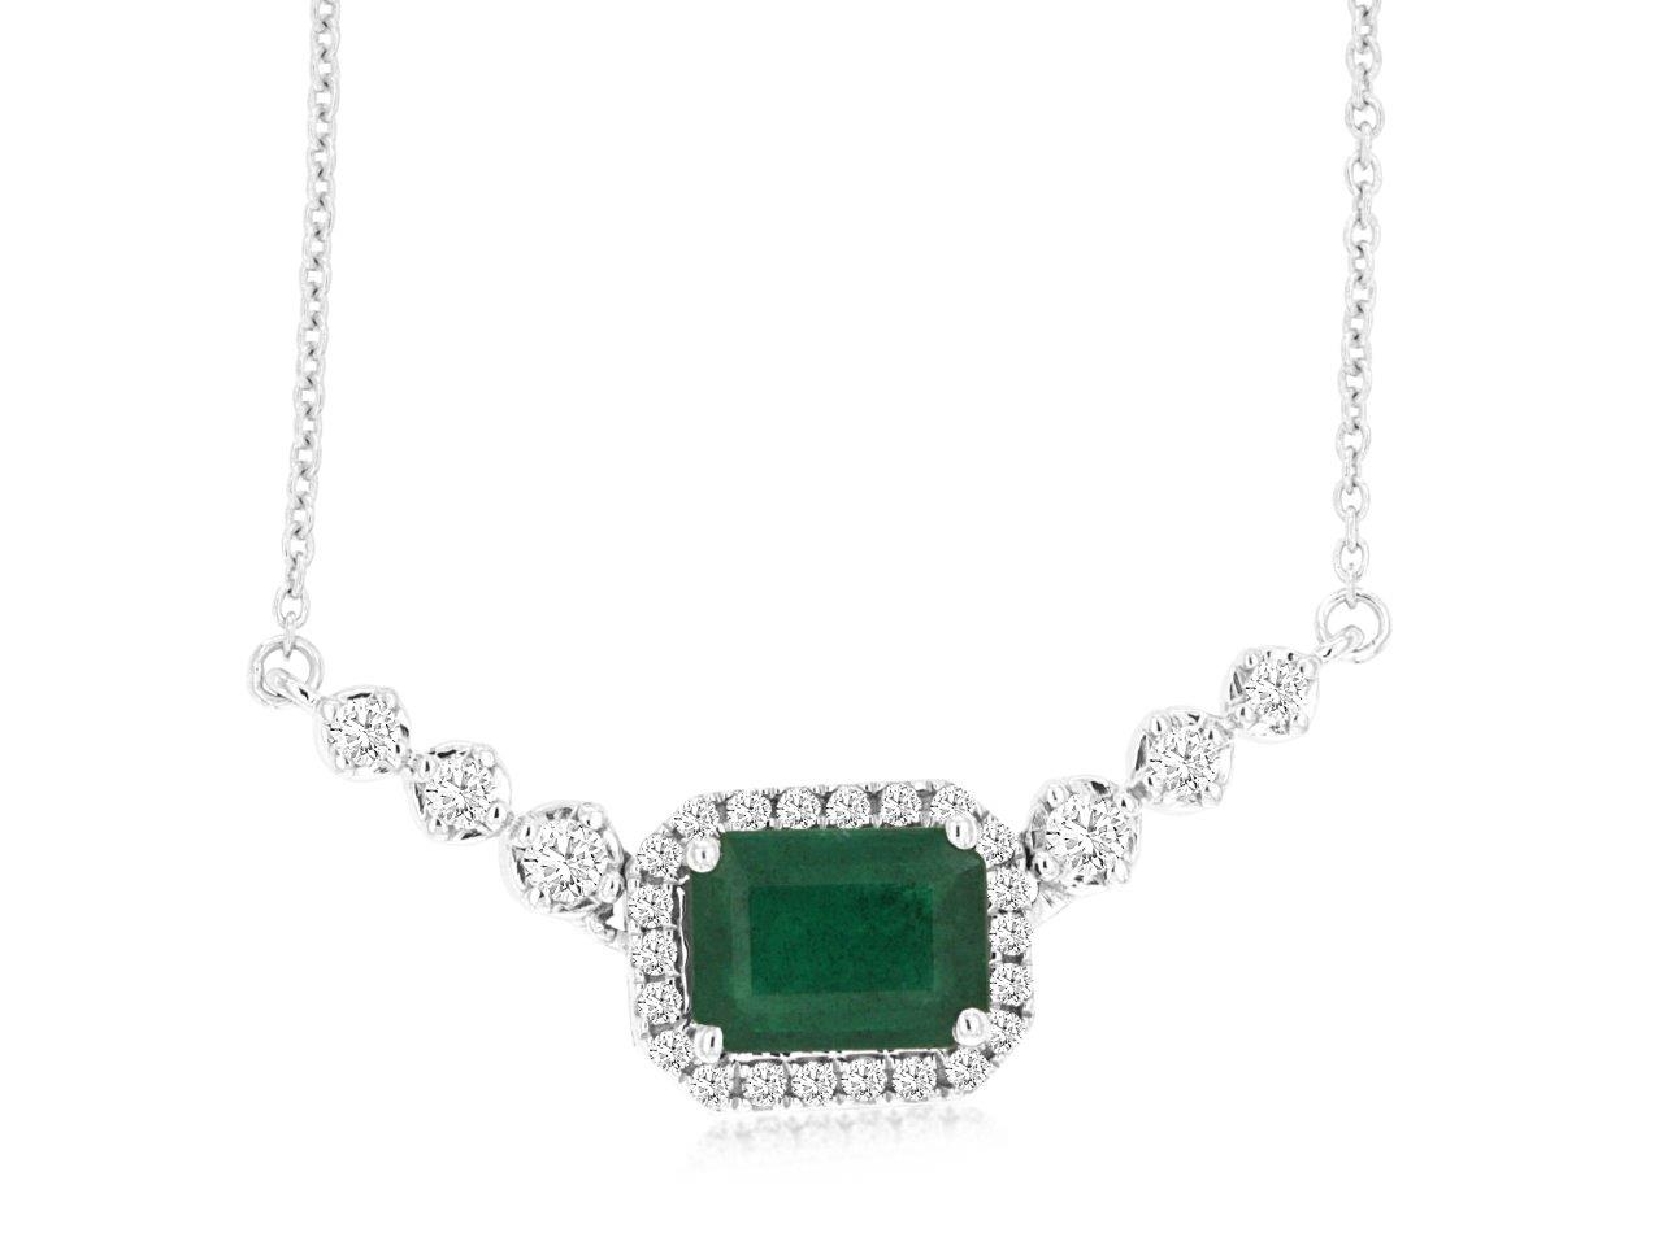 14K White Gold Emerald Necklace with Diamond Halo and Accent Diamonds 18 Inches
.025CT Diamond
1CT Emerald